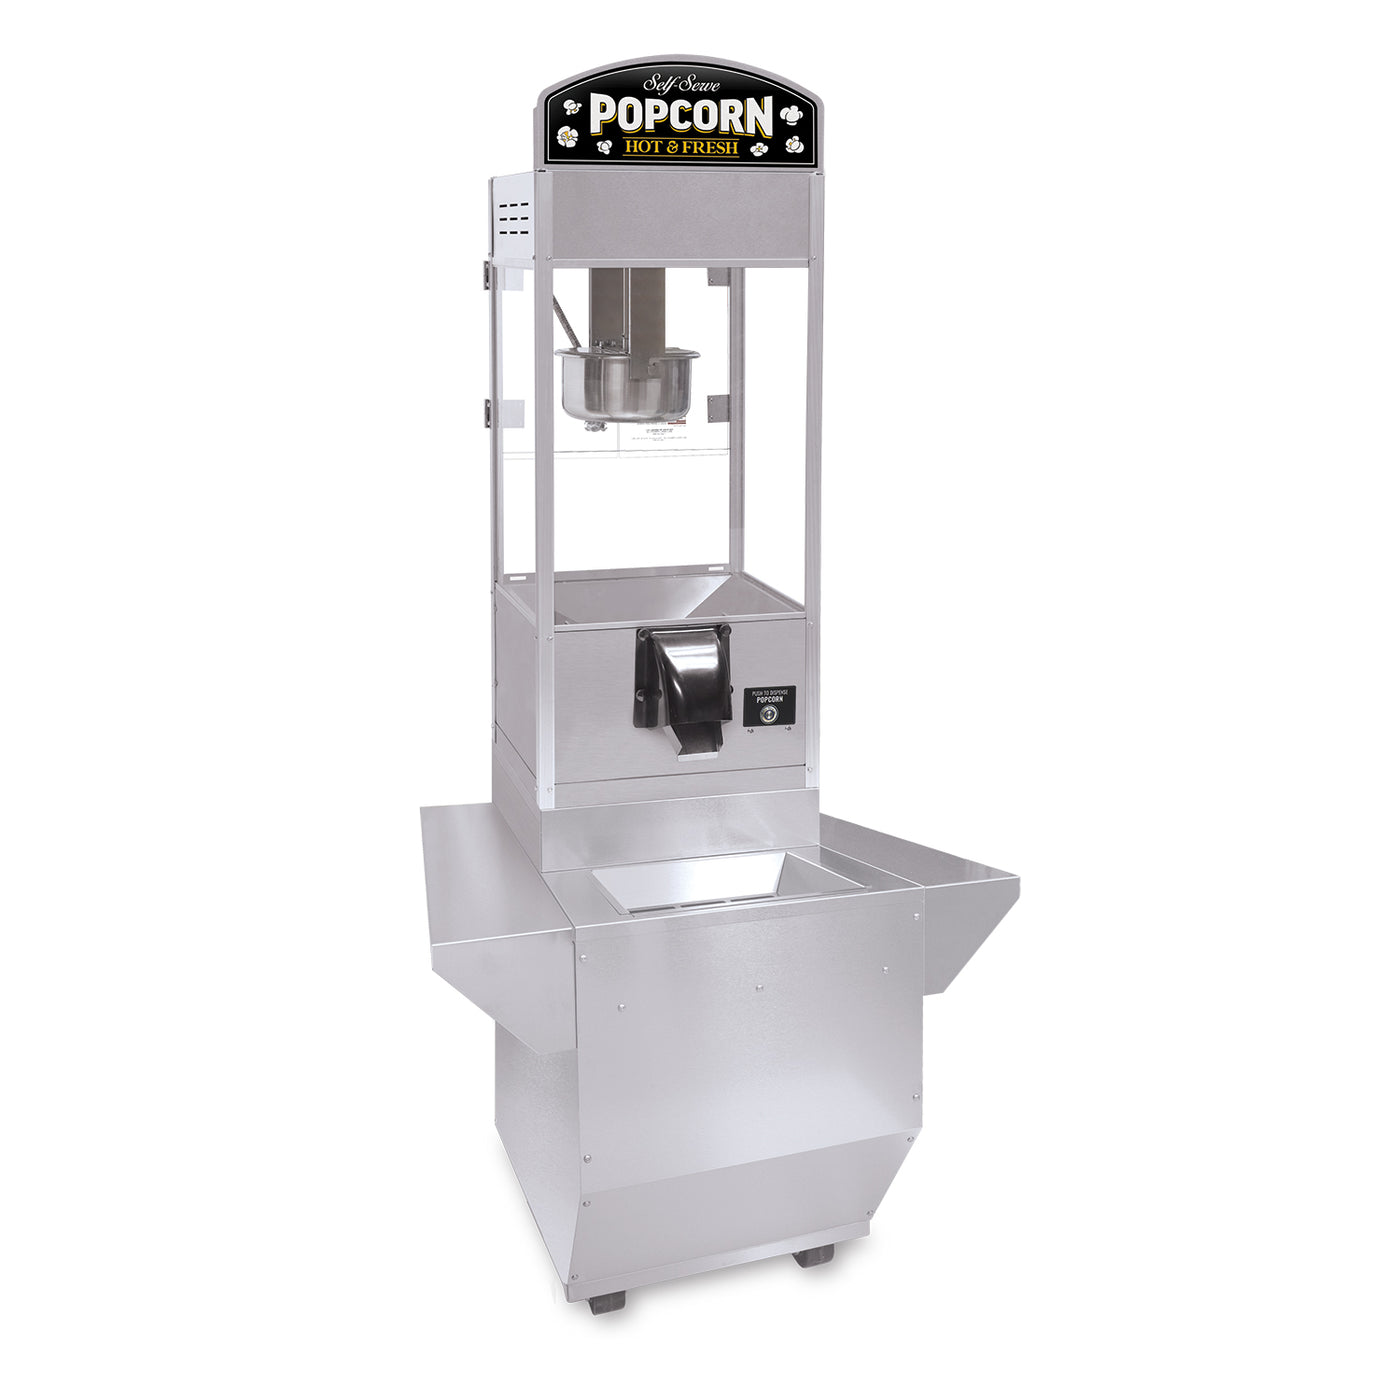 ReadyServe® One Popcorn Vending Machine